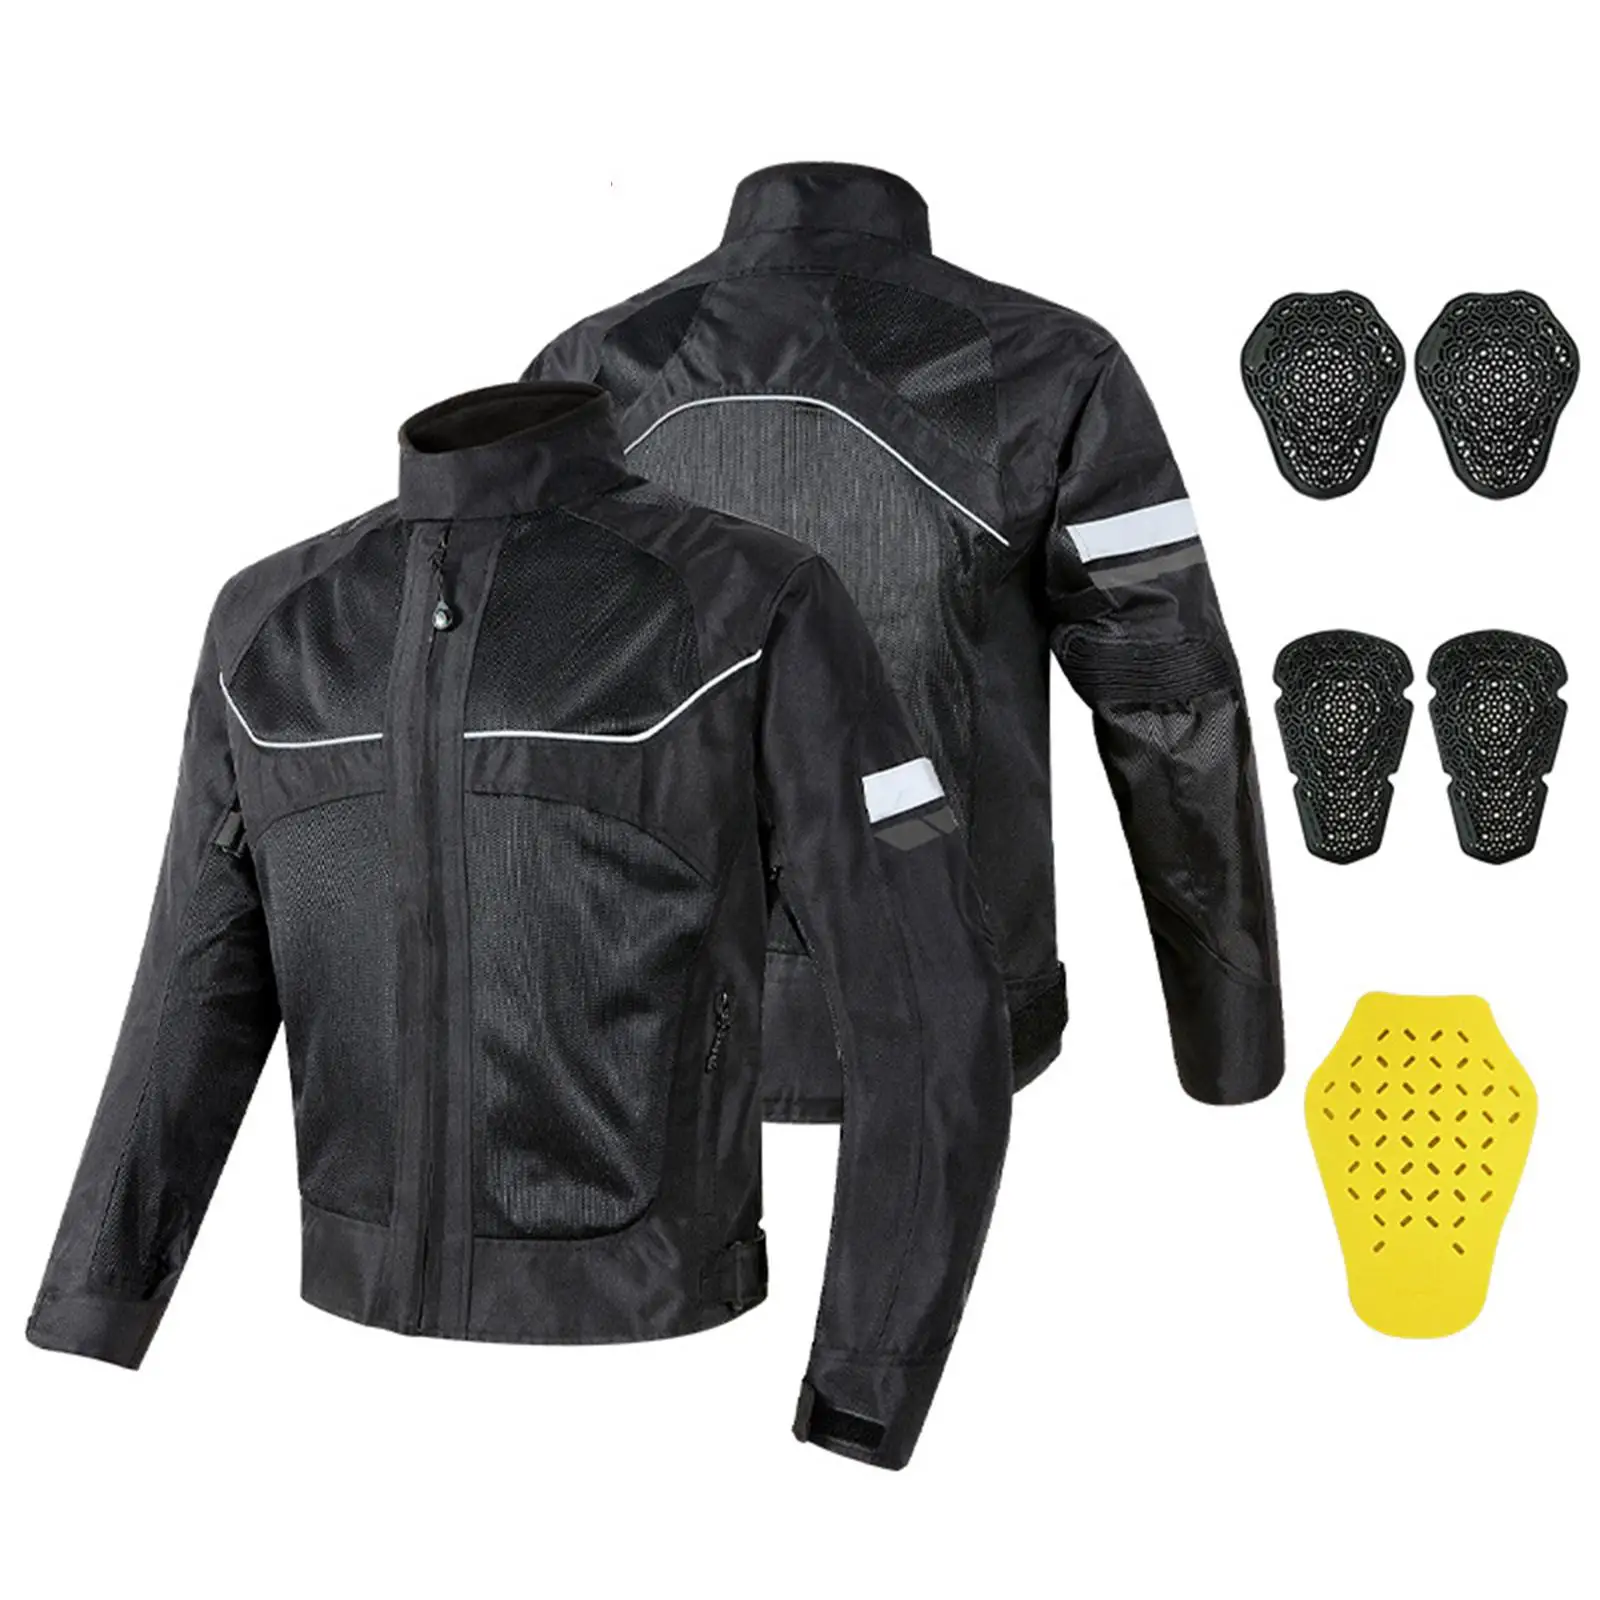 Motorcycle jacket for men Motorcycle jacket for summer motorcycle